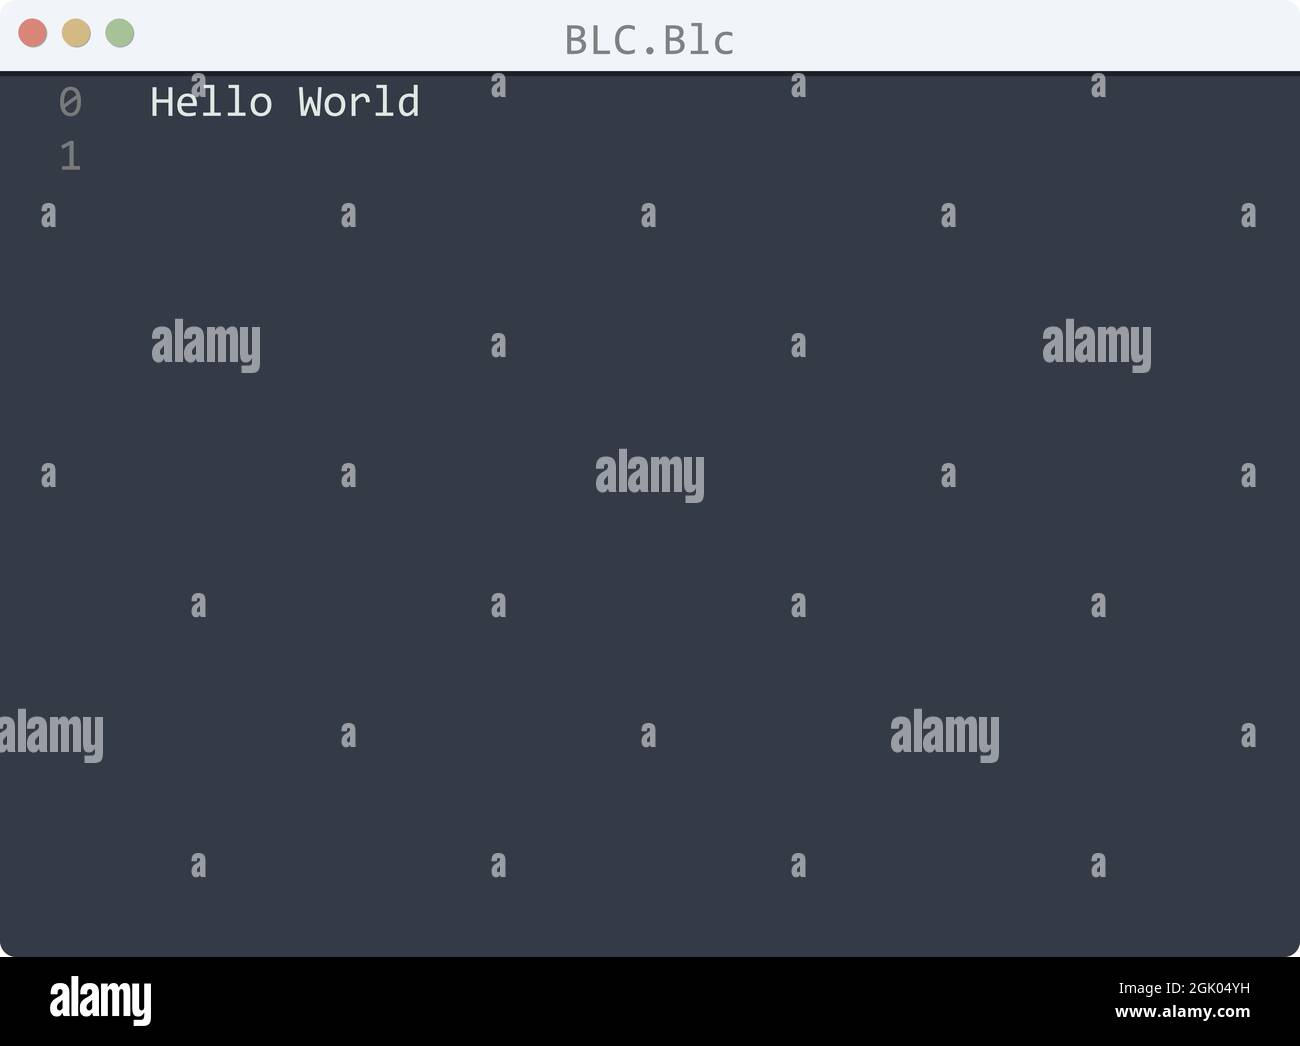 BLC language Hello World program sample in editor window illustration Stock Vector